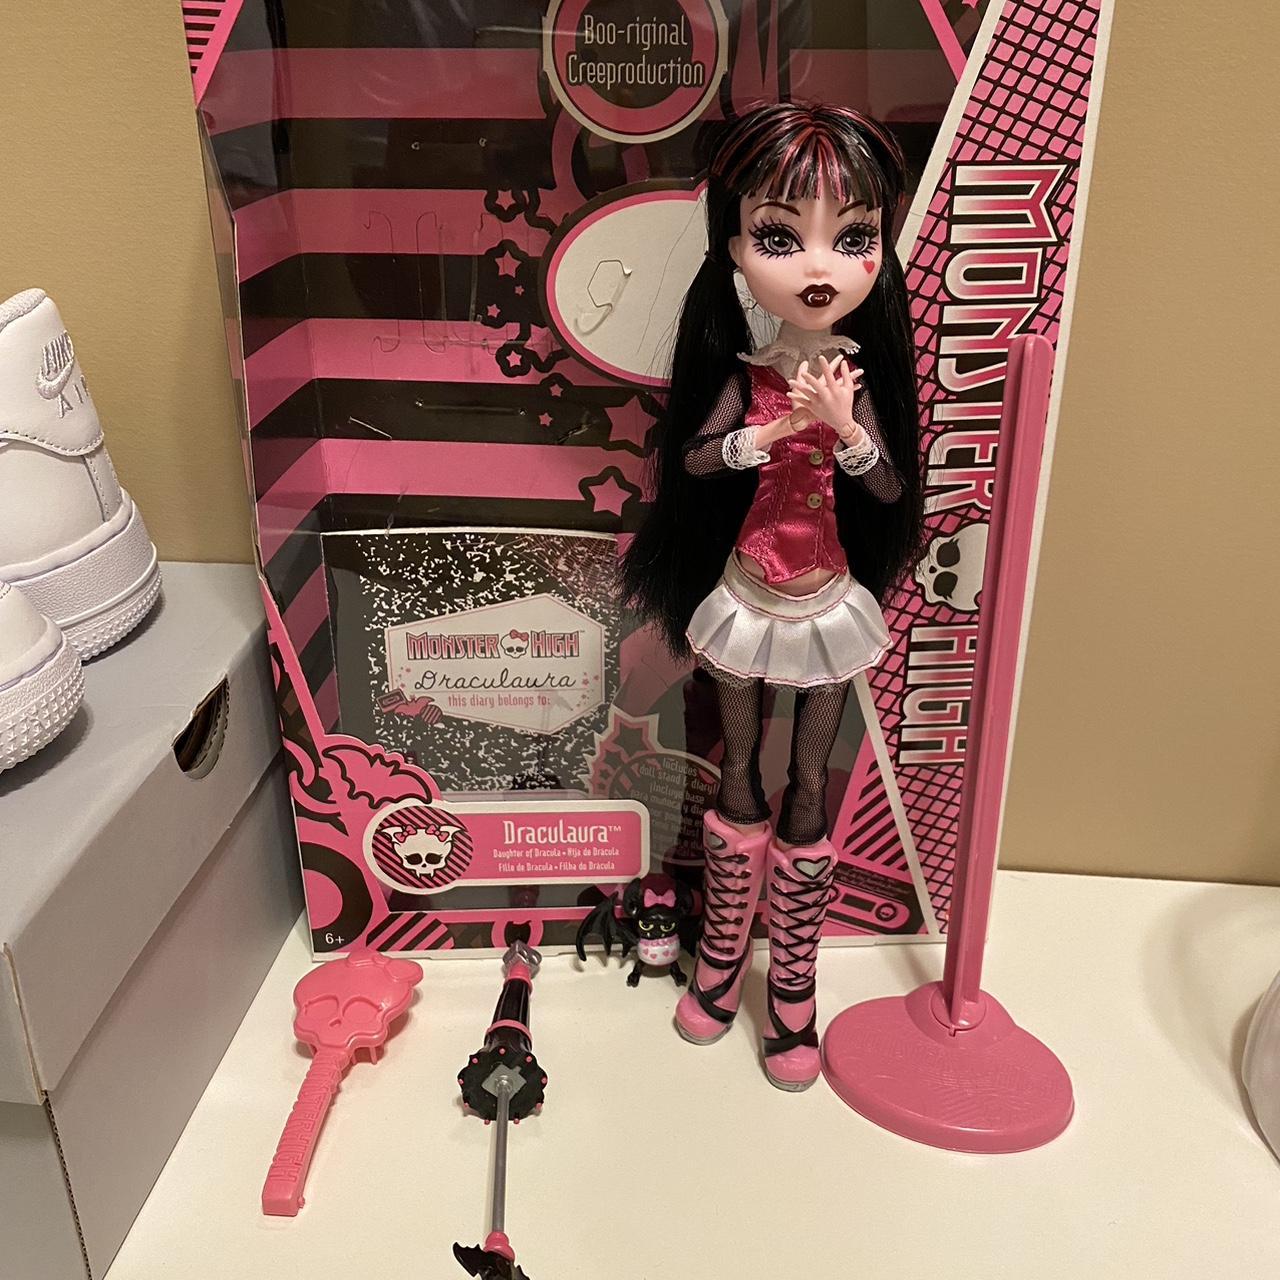 Monster High Creeproduction Draculaura Doll